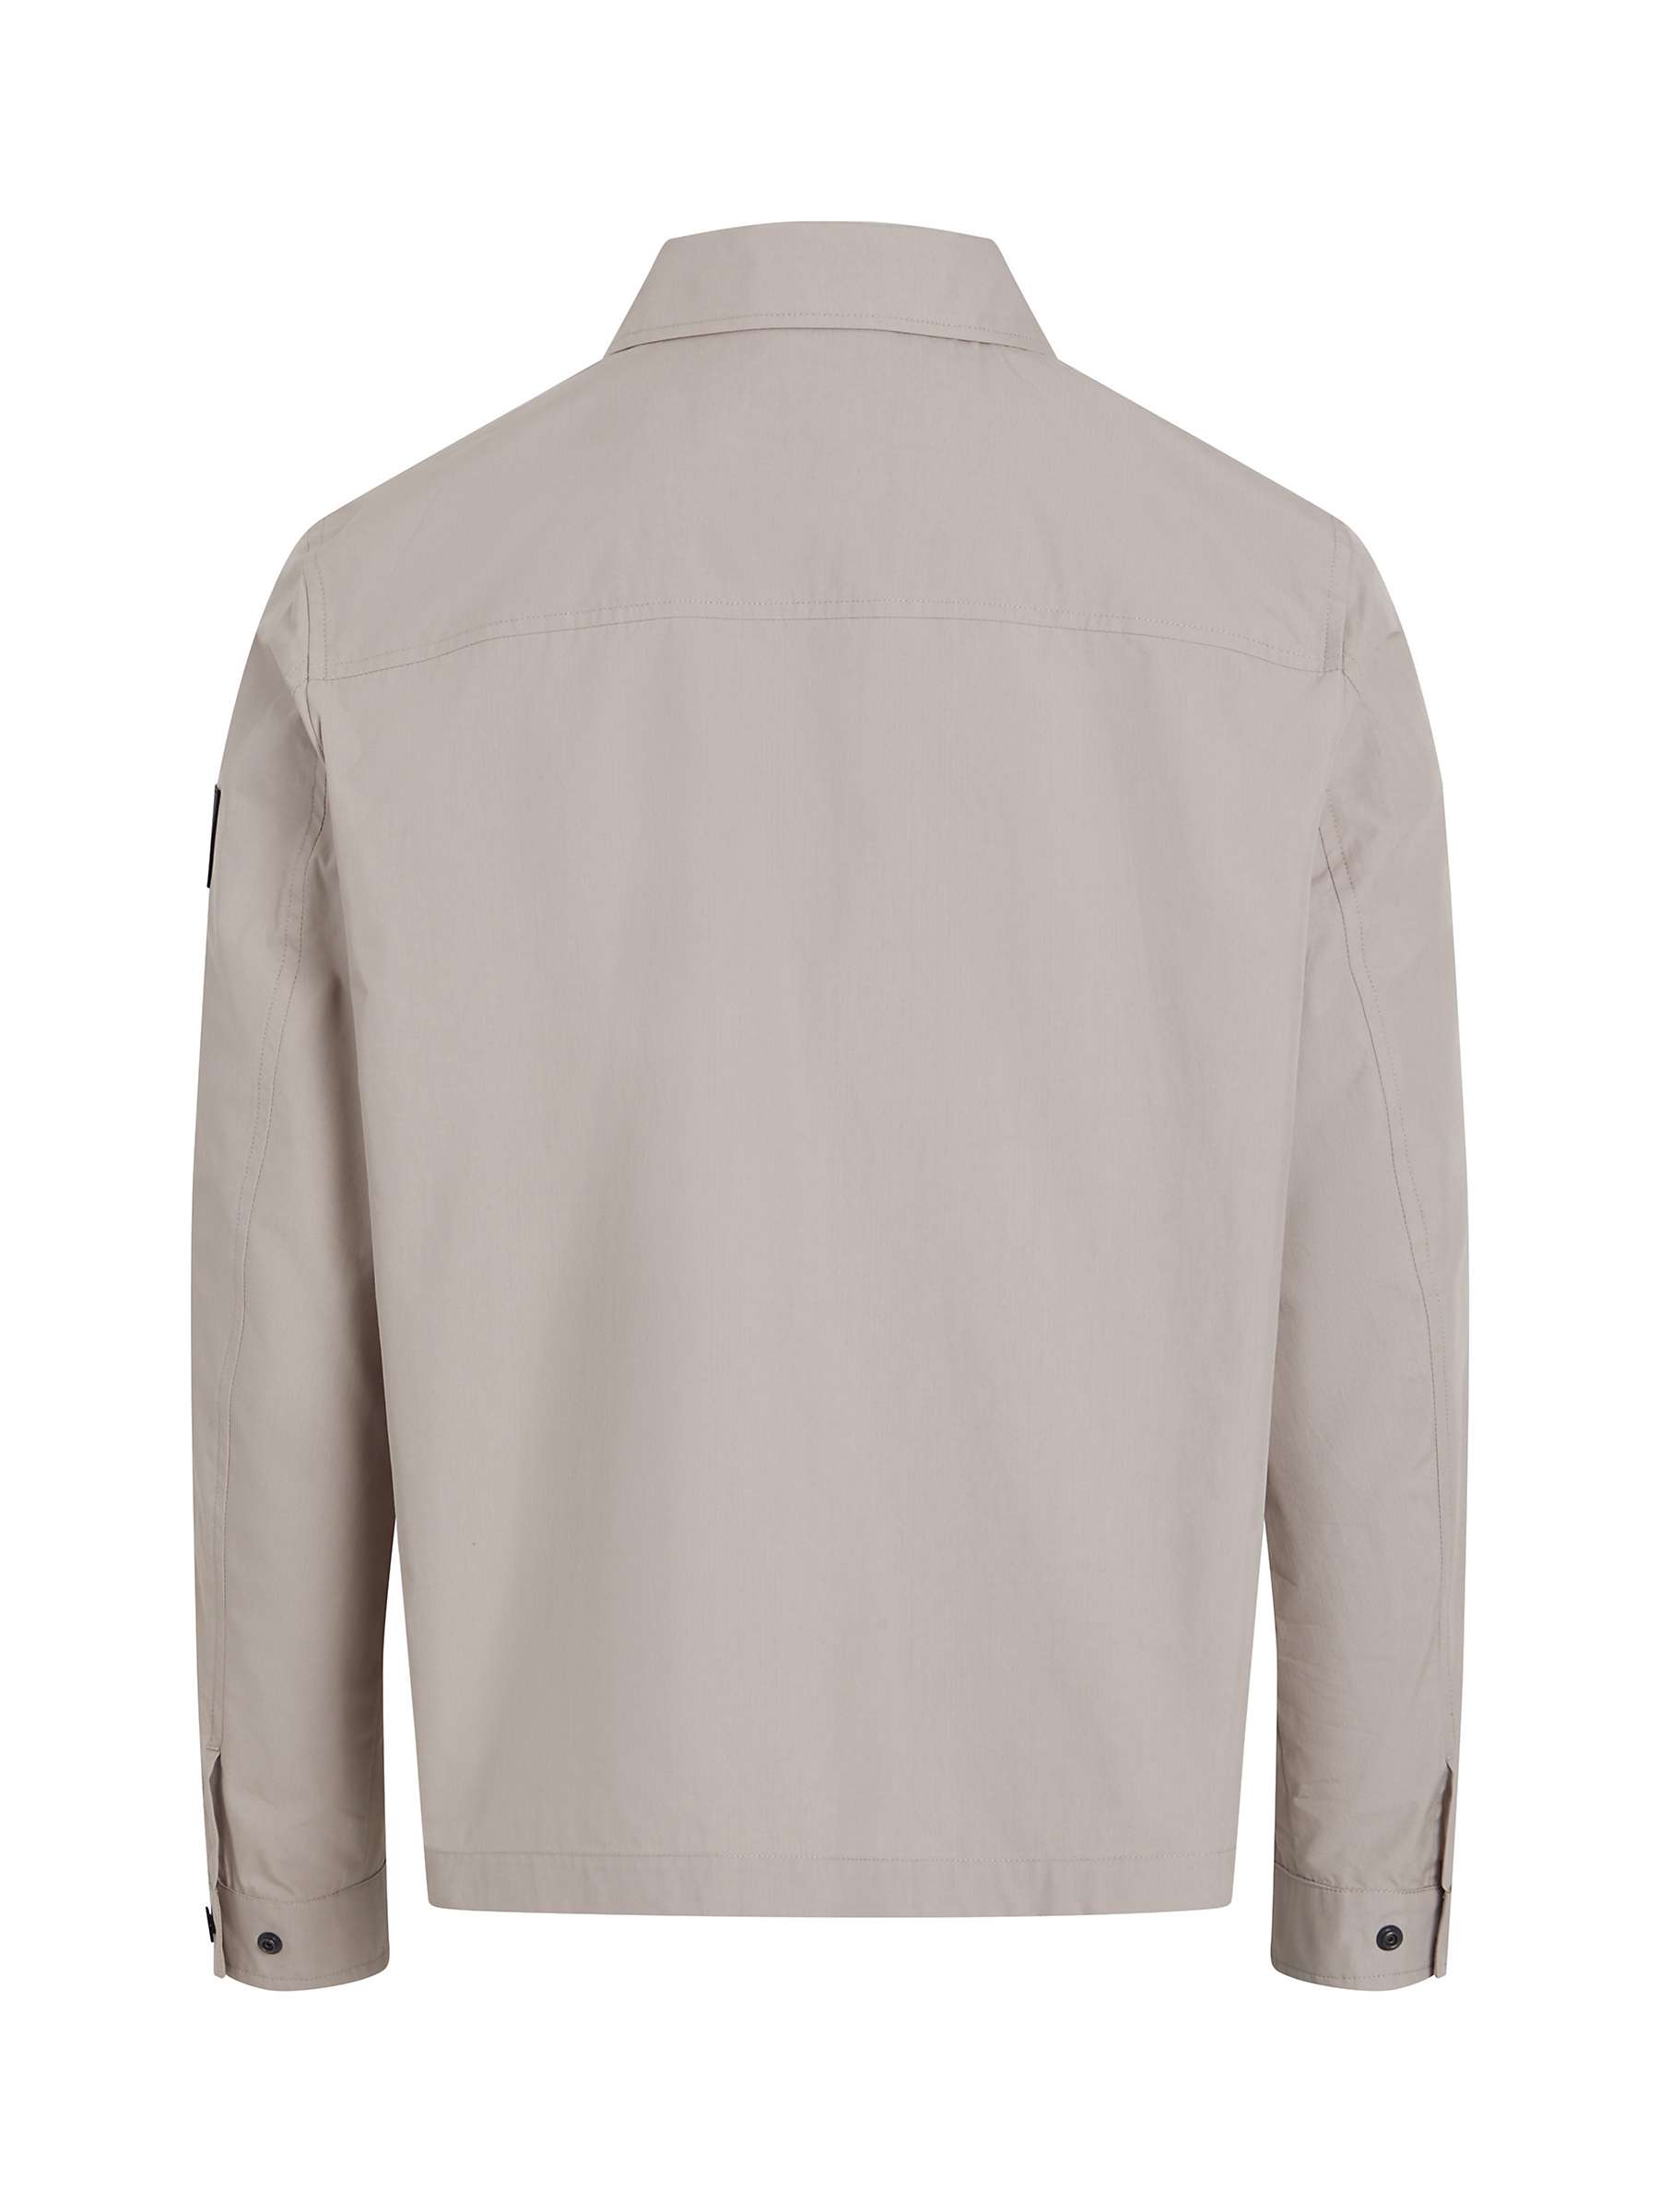 Buy Calvin Klein Recycled Light Shirt Jacket, Grey Online at johnlewis.com